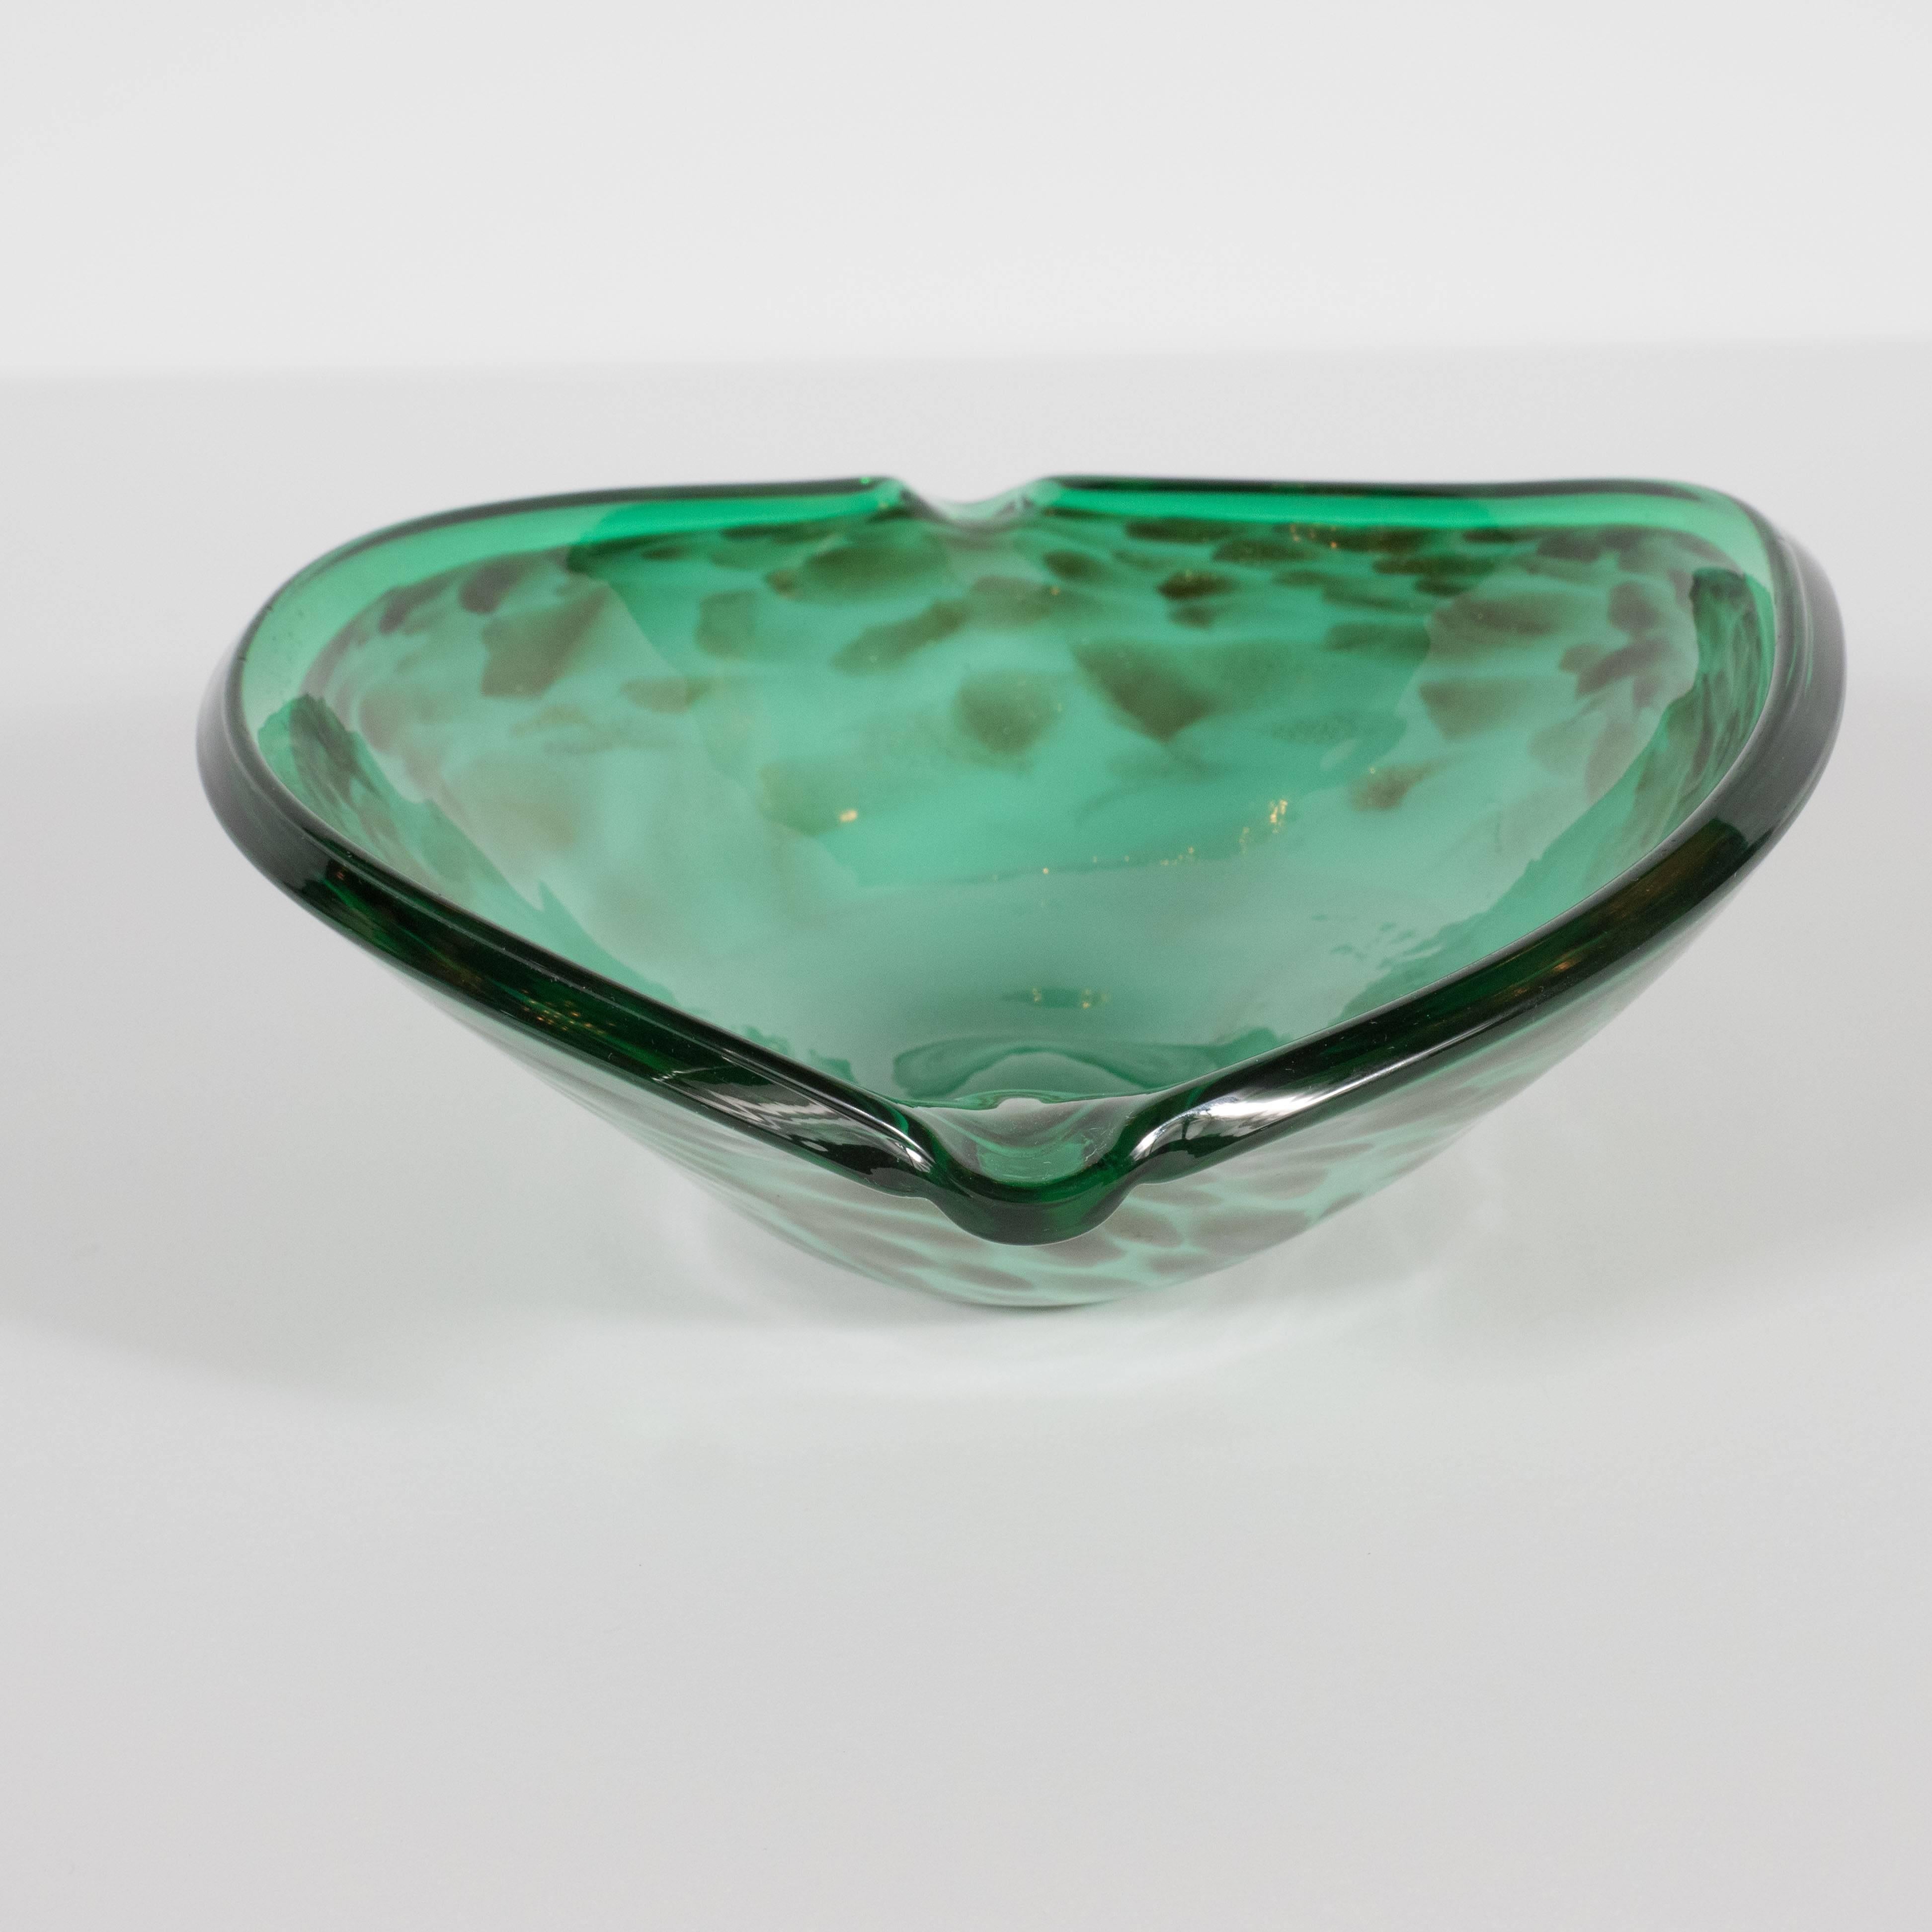 Mid-20th Century Mid-Century Modern Murano Glass Bowl in Sea Foam and Iridescent Emerald Green